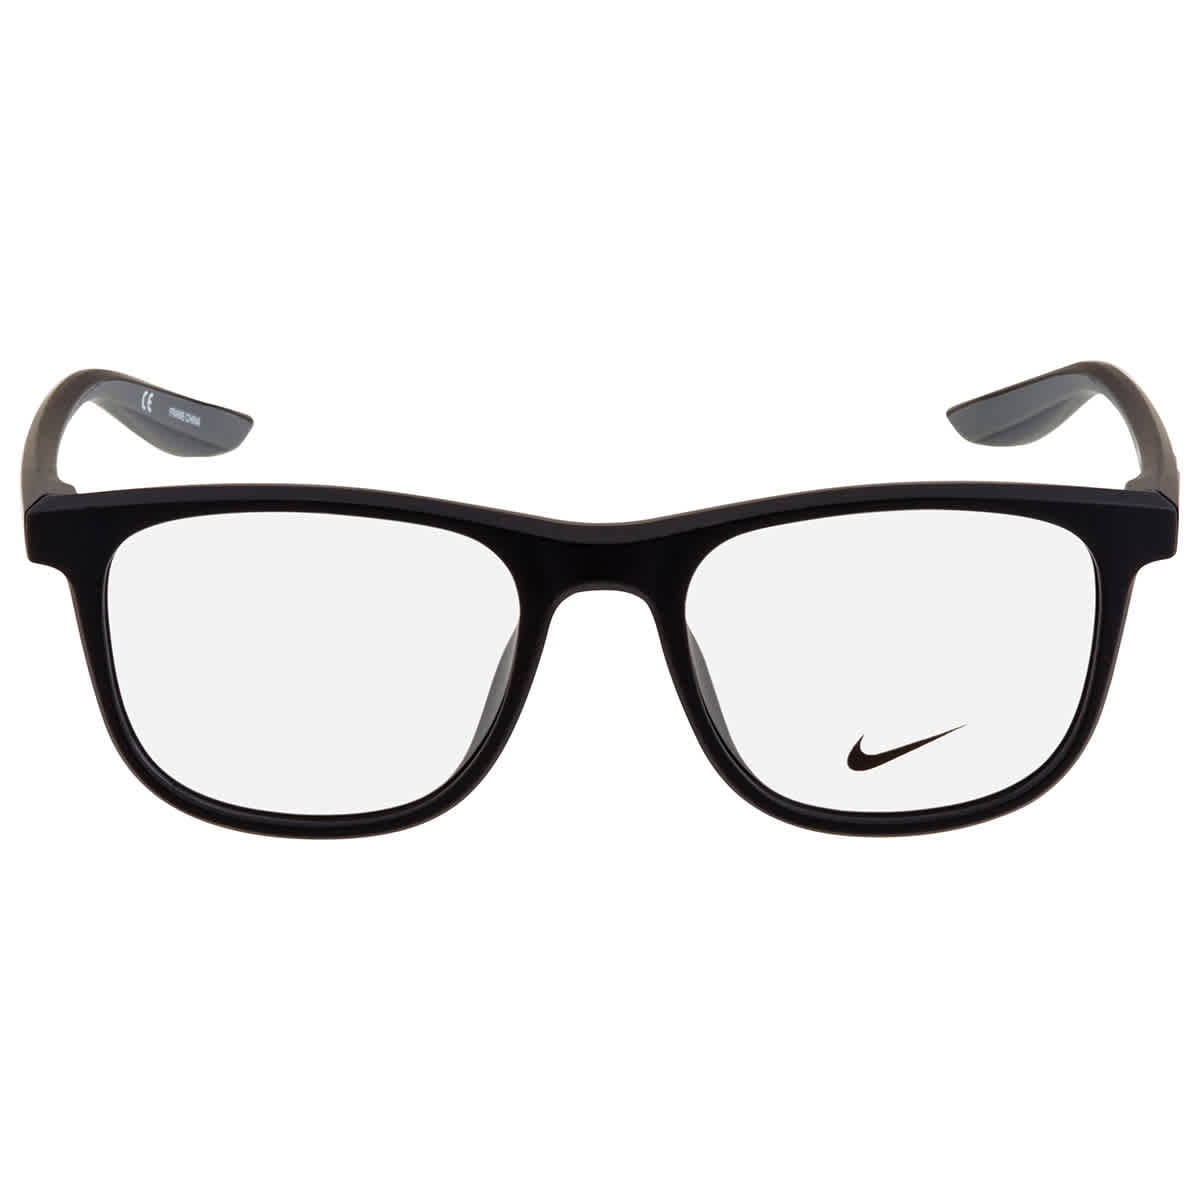 Nike Demo Rectangular Unisex Eyeglasses NIKE 7037 001 51 - Walmart.com